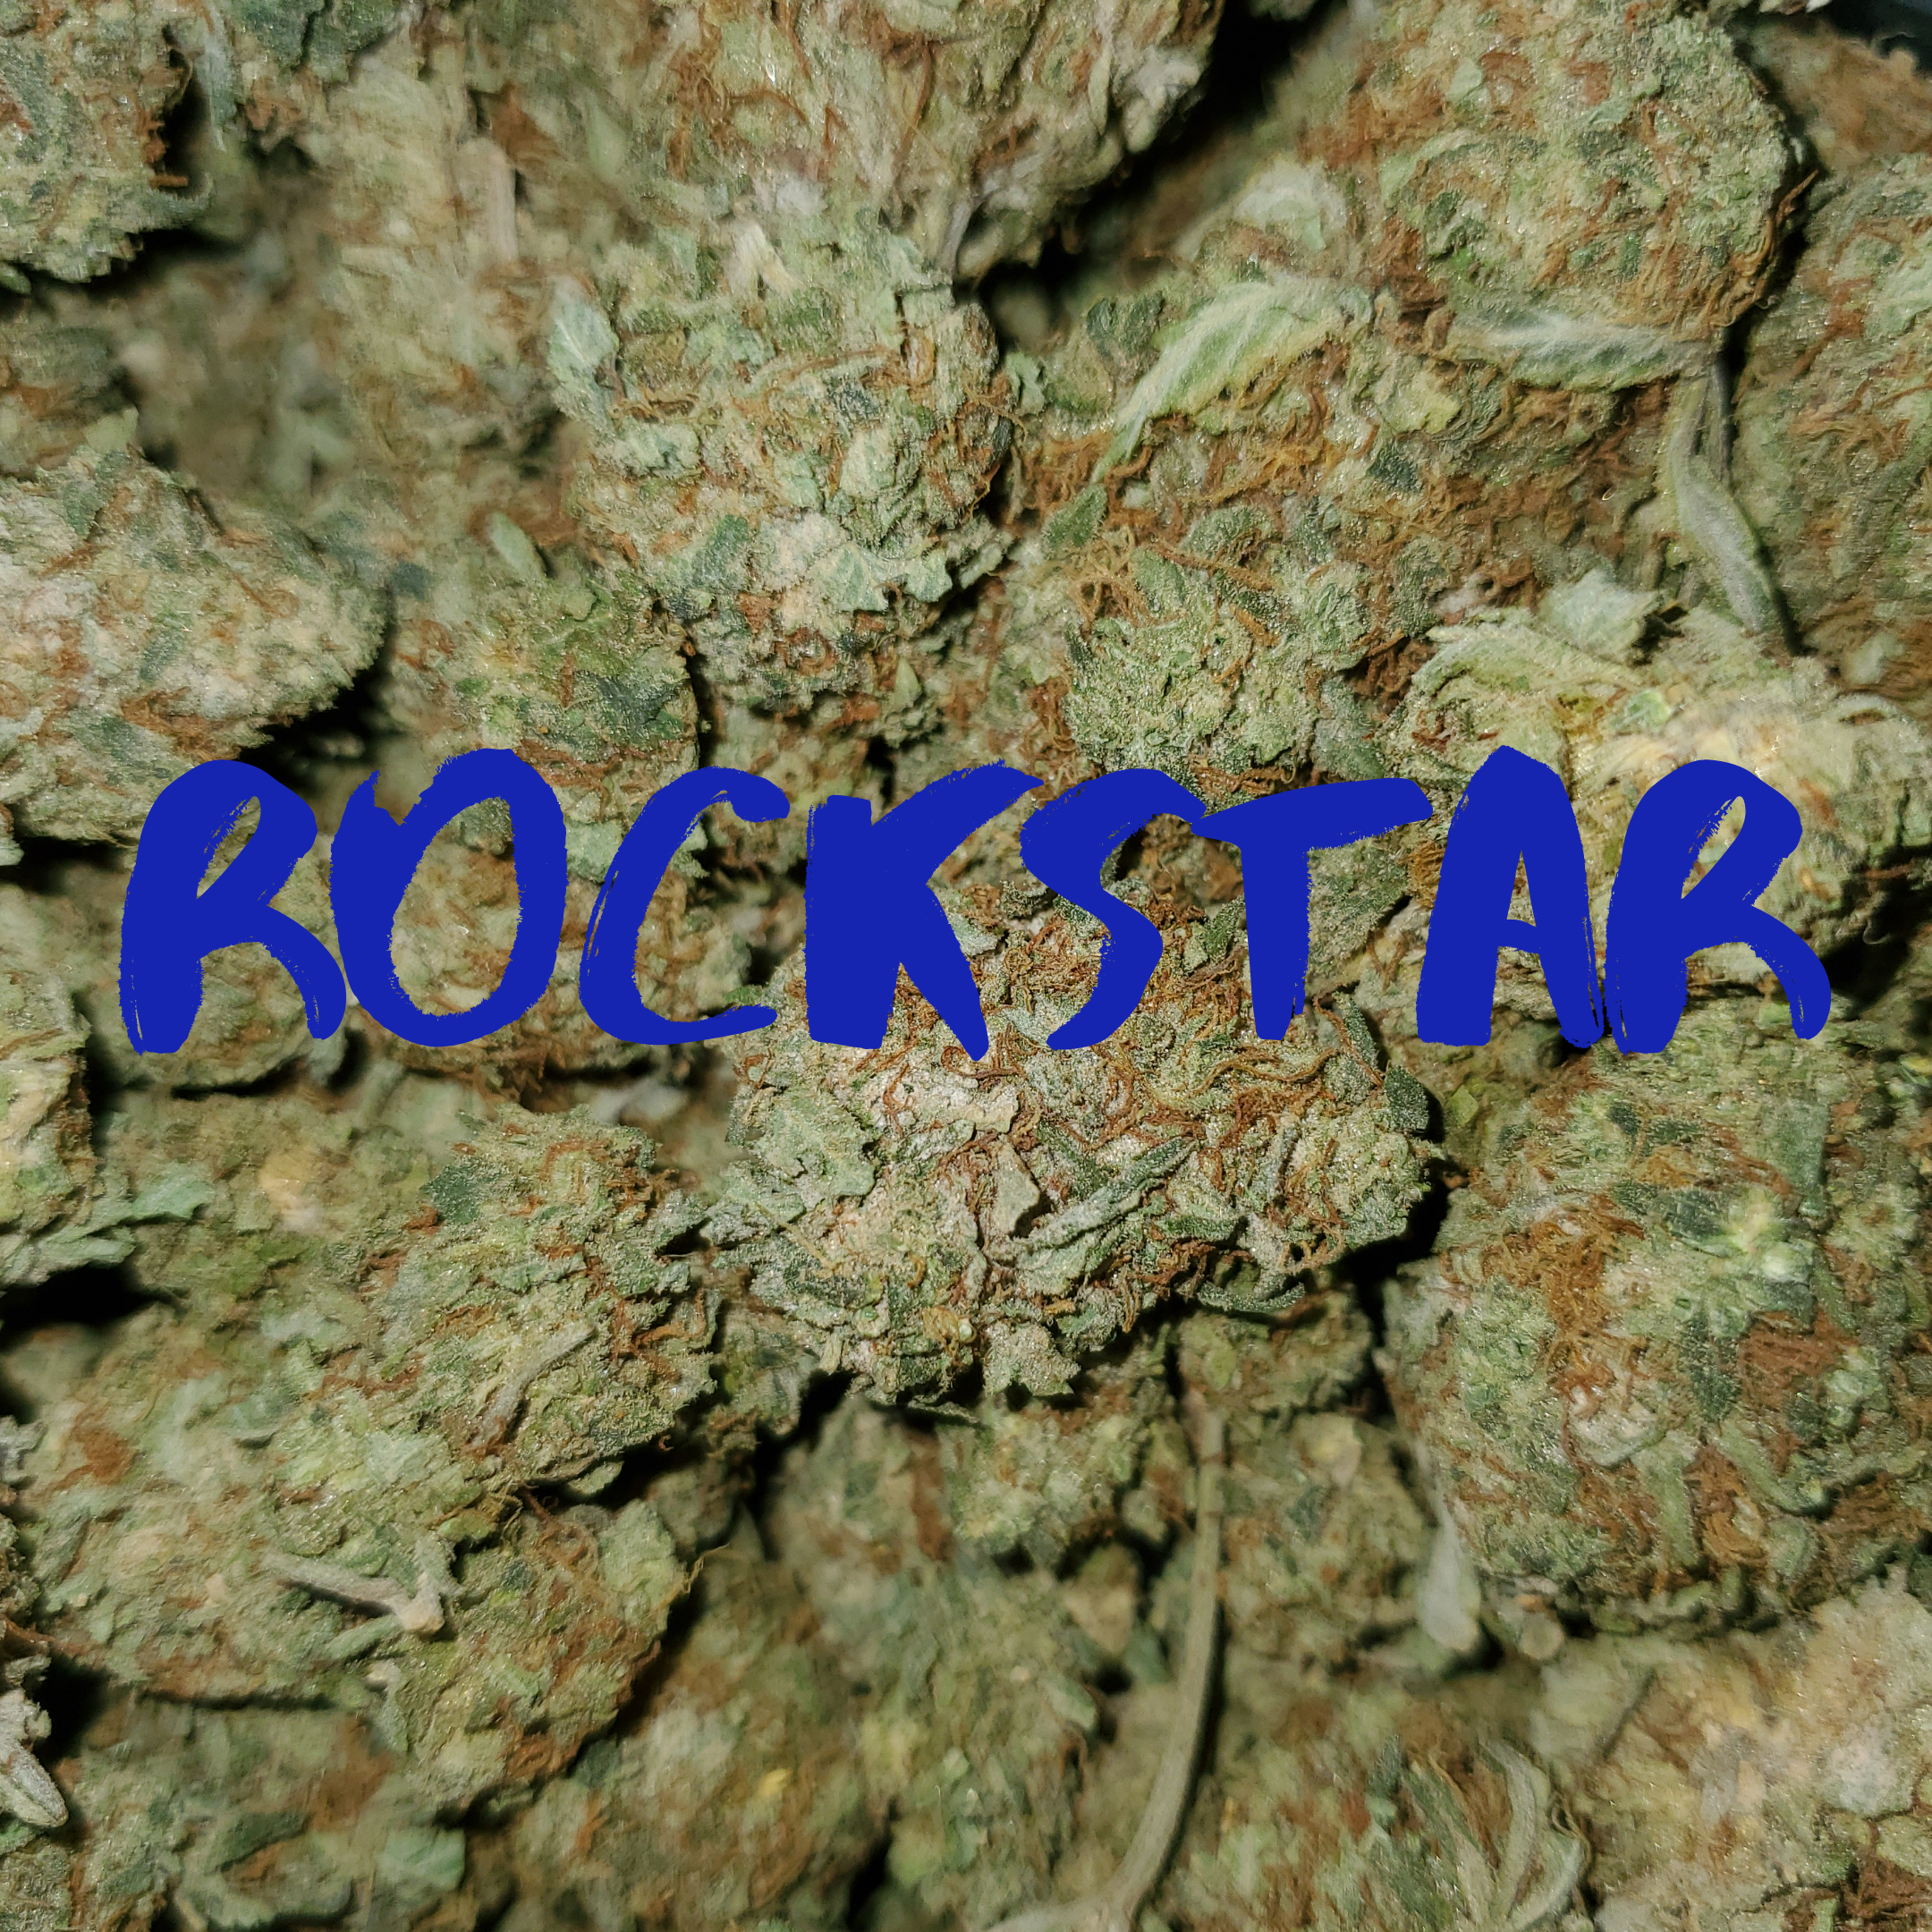 pink rockstar weed strain